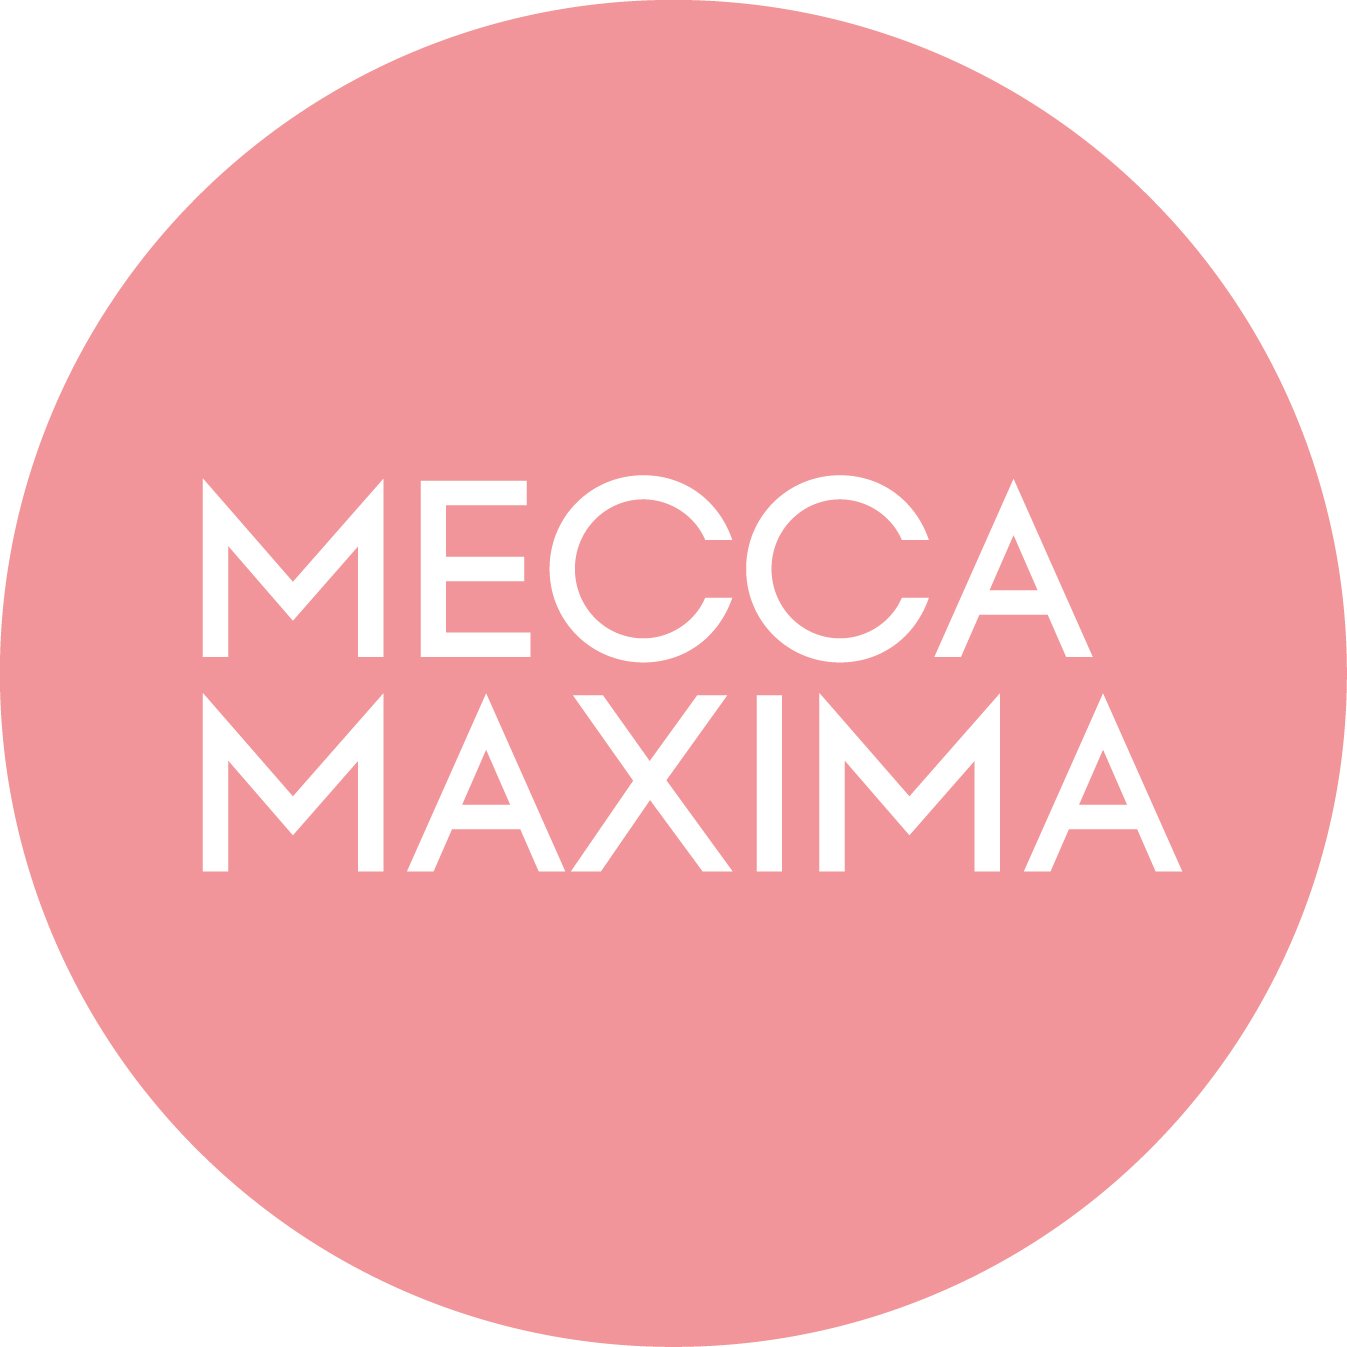 mecca-maxima-coral-circle-logo.jpg